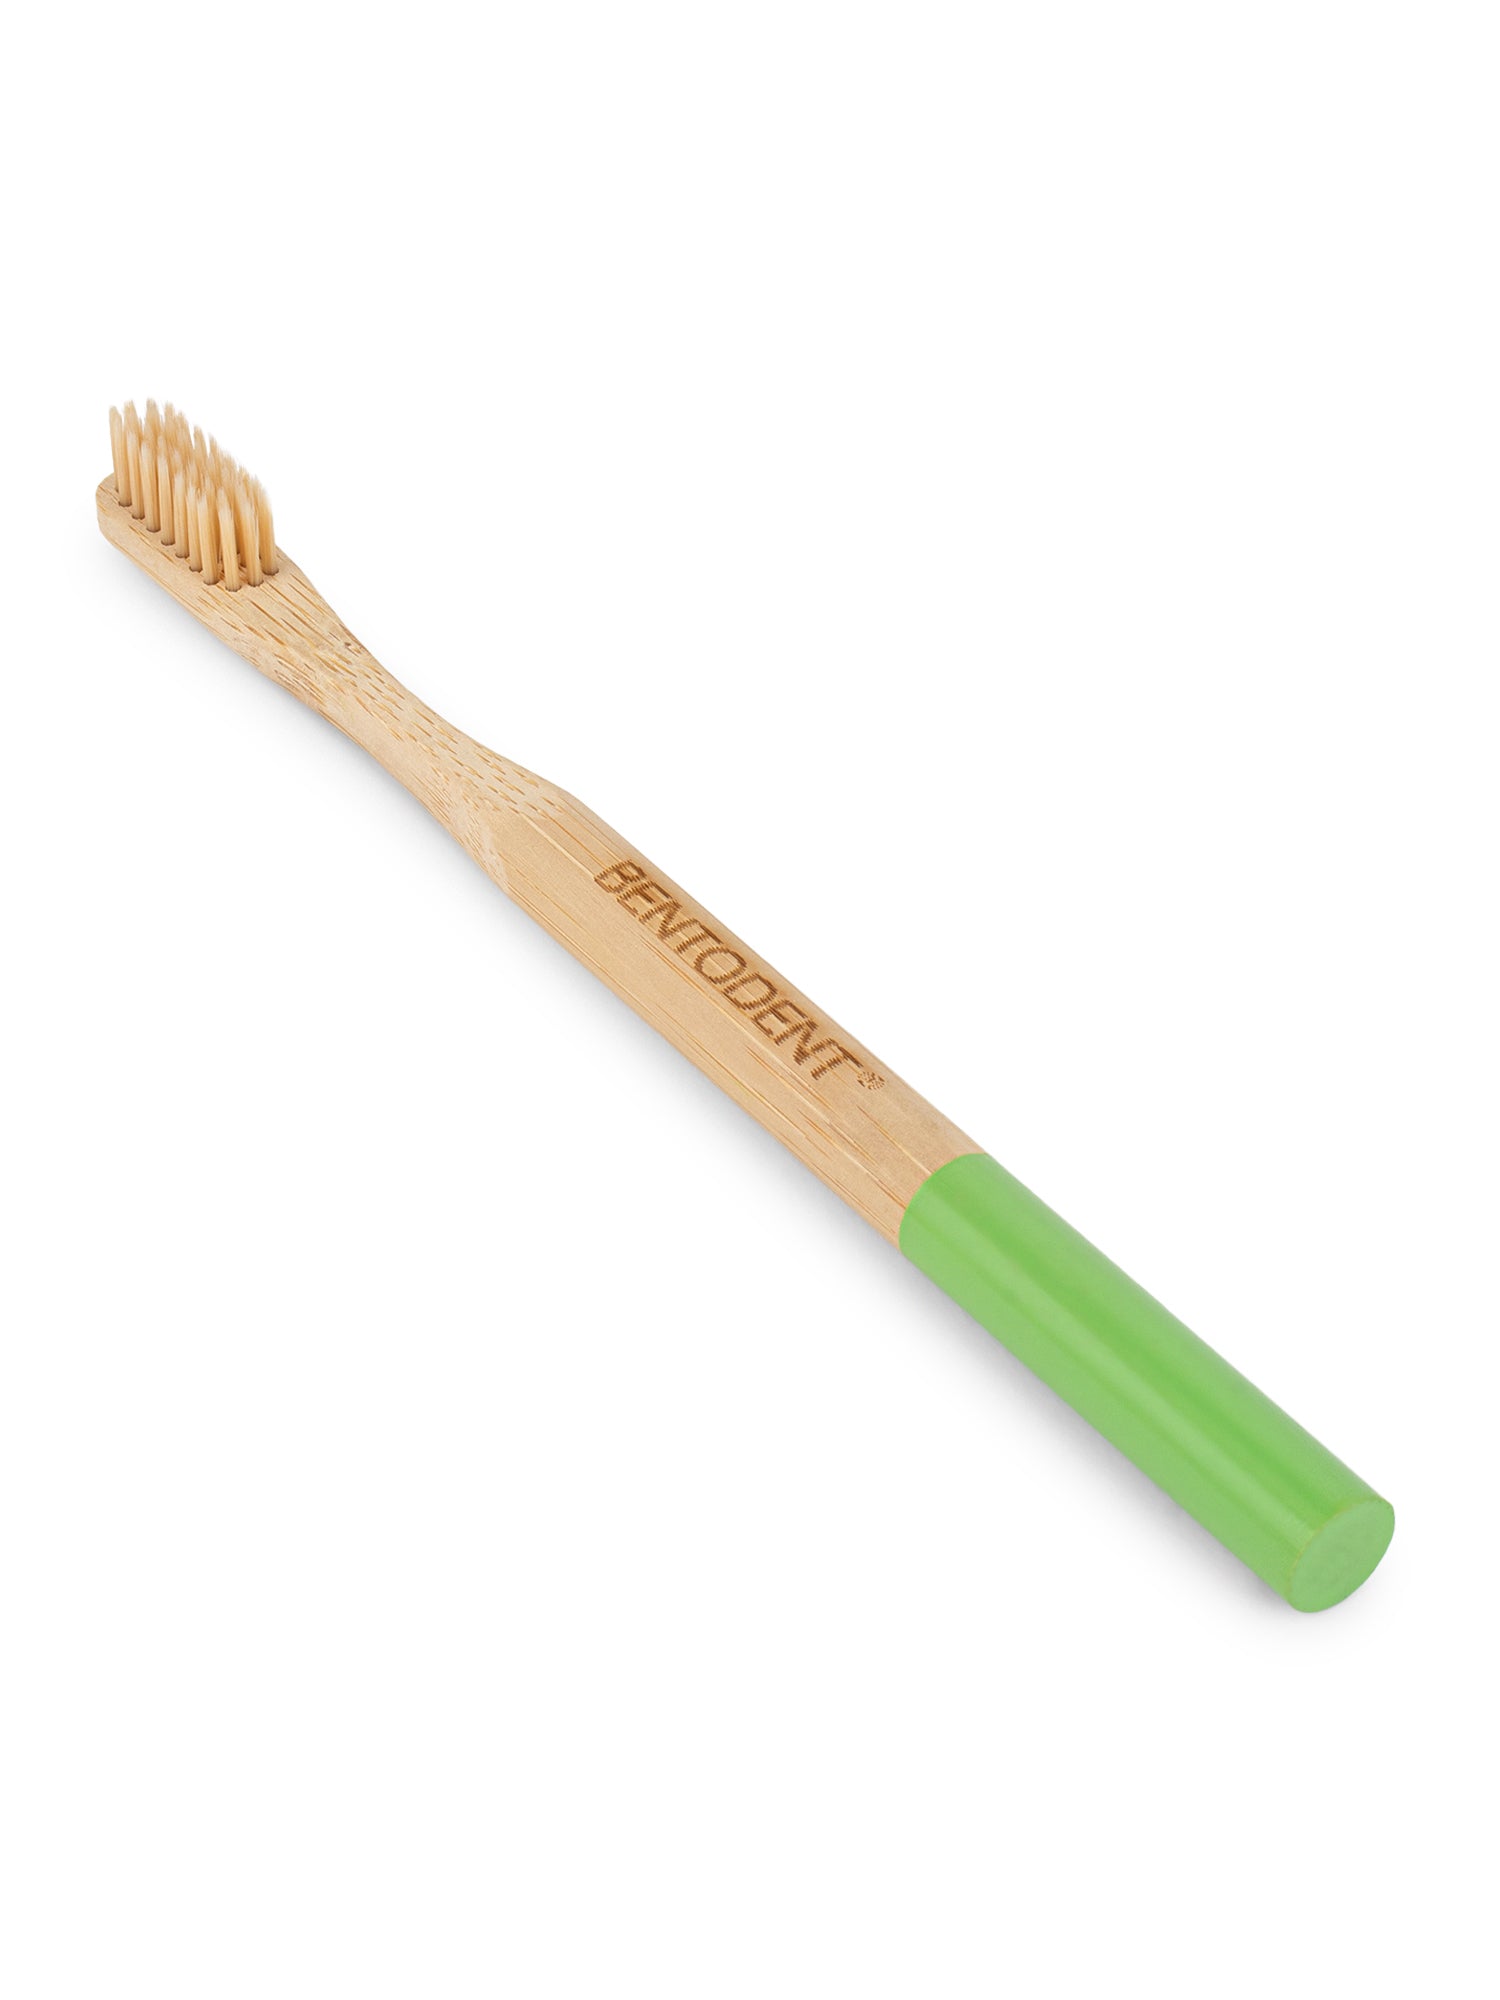 Bentodent Eco Brush Bamboo Toothbrush (non - charcoal) - Ultra Soft - Indian Dental Organization